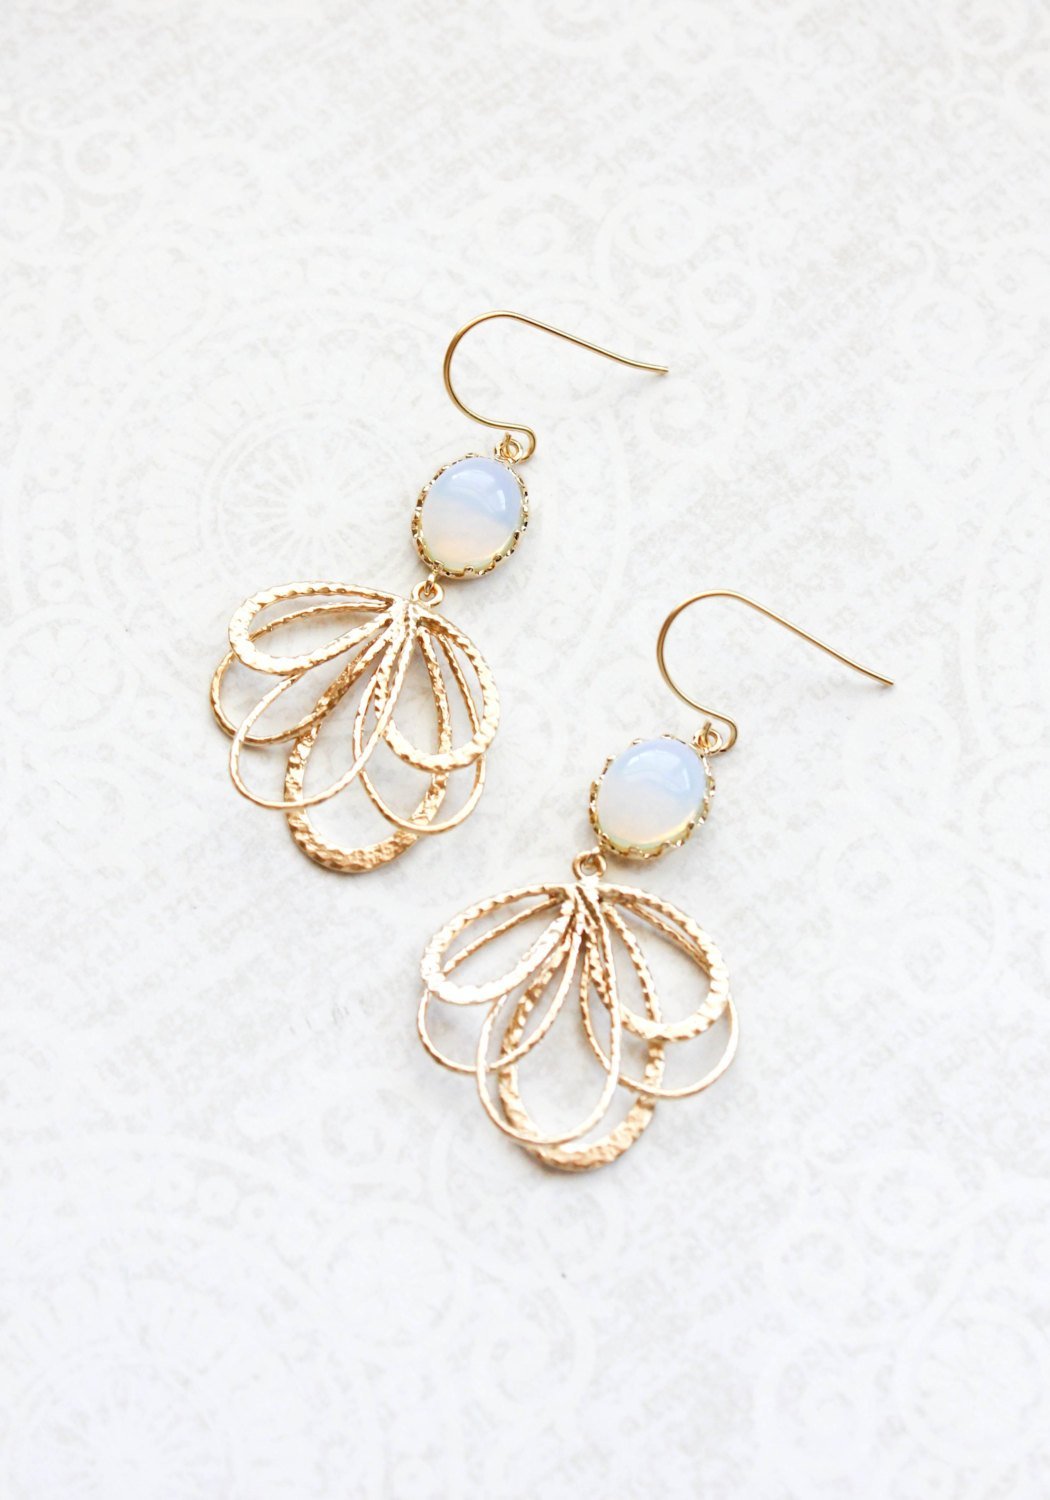 Gold Loop Earrings - Opal Glass